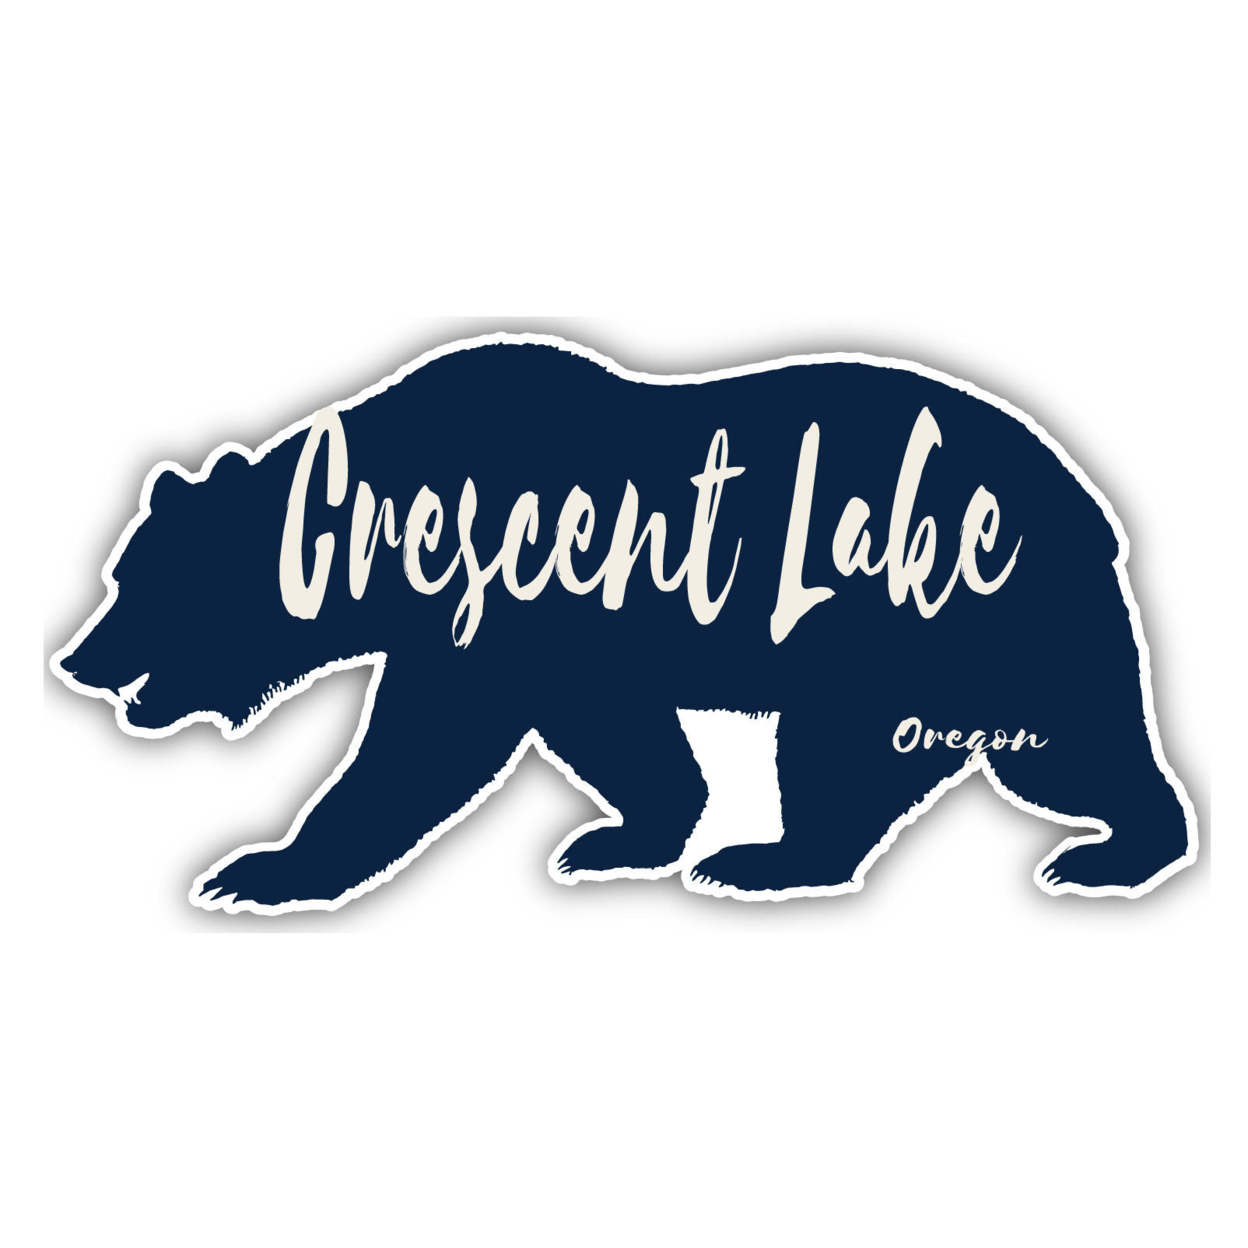 Crescent Lake Oregon Souvenir Decorative Stickers (Choose Theme And Size) - 4-Pack, 6-Inch, Tent